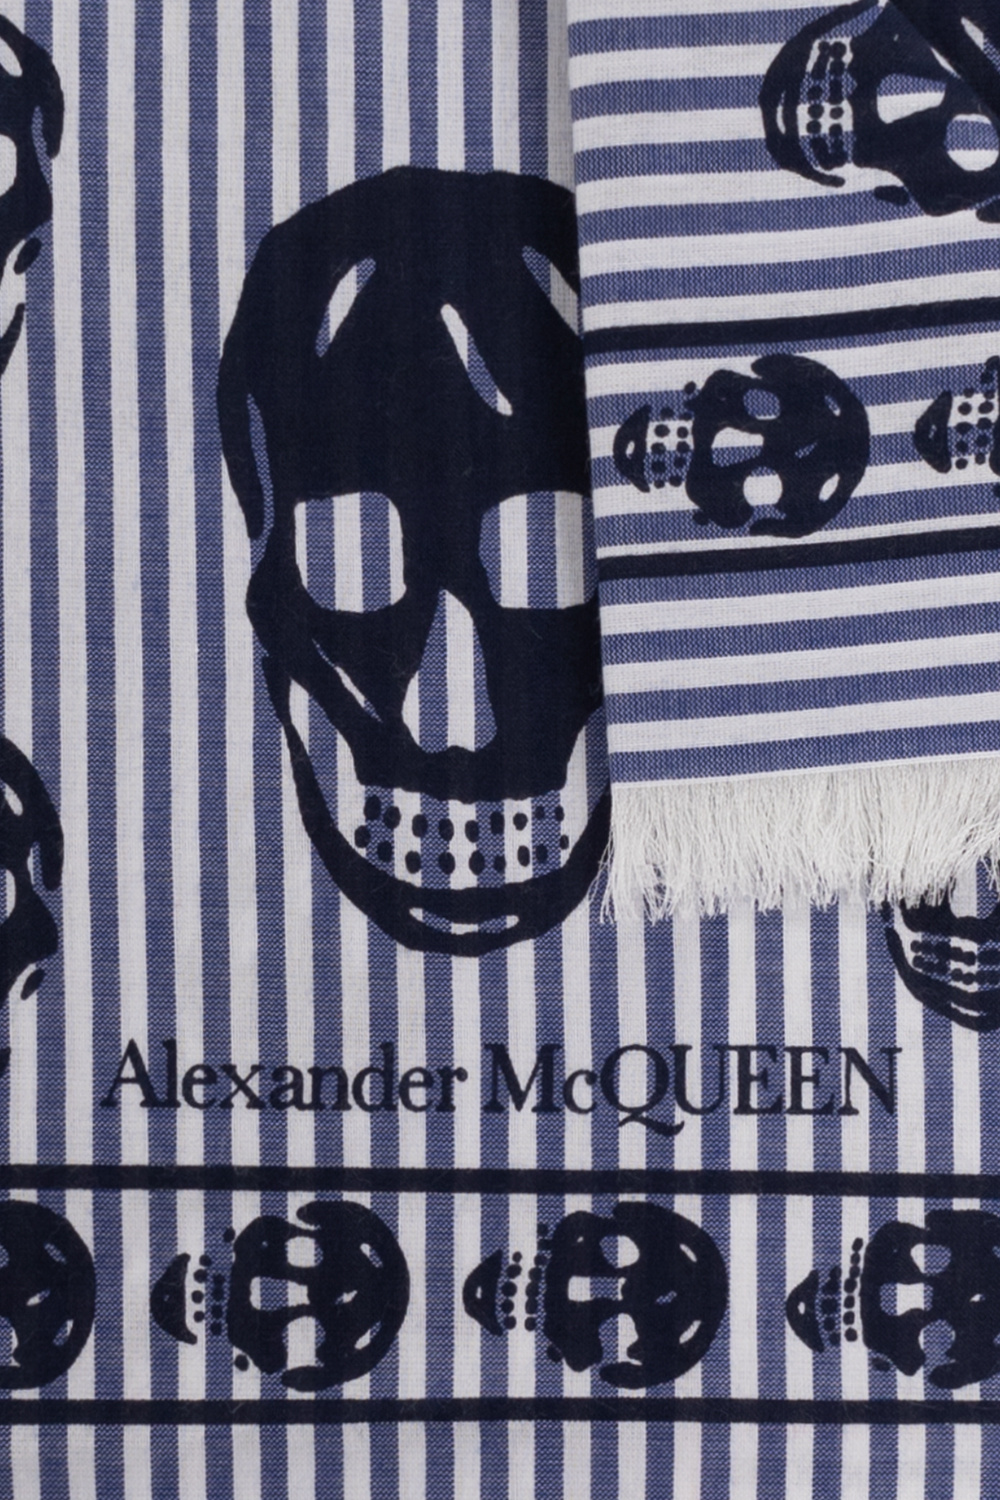 Alexander McQueen bodycond scarf